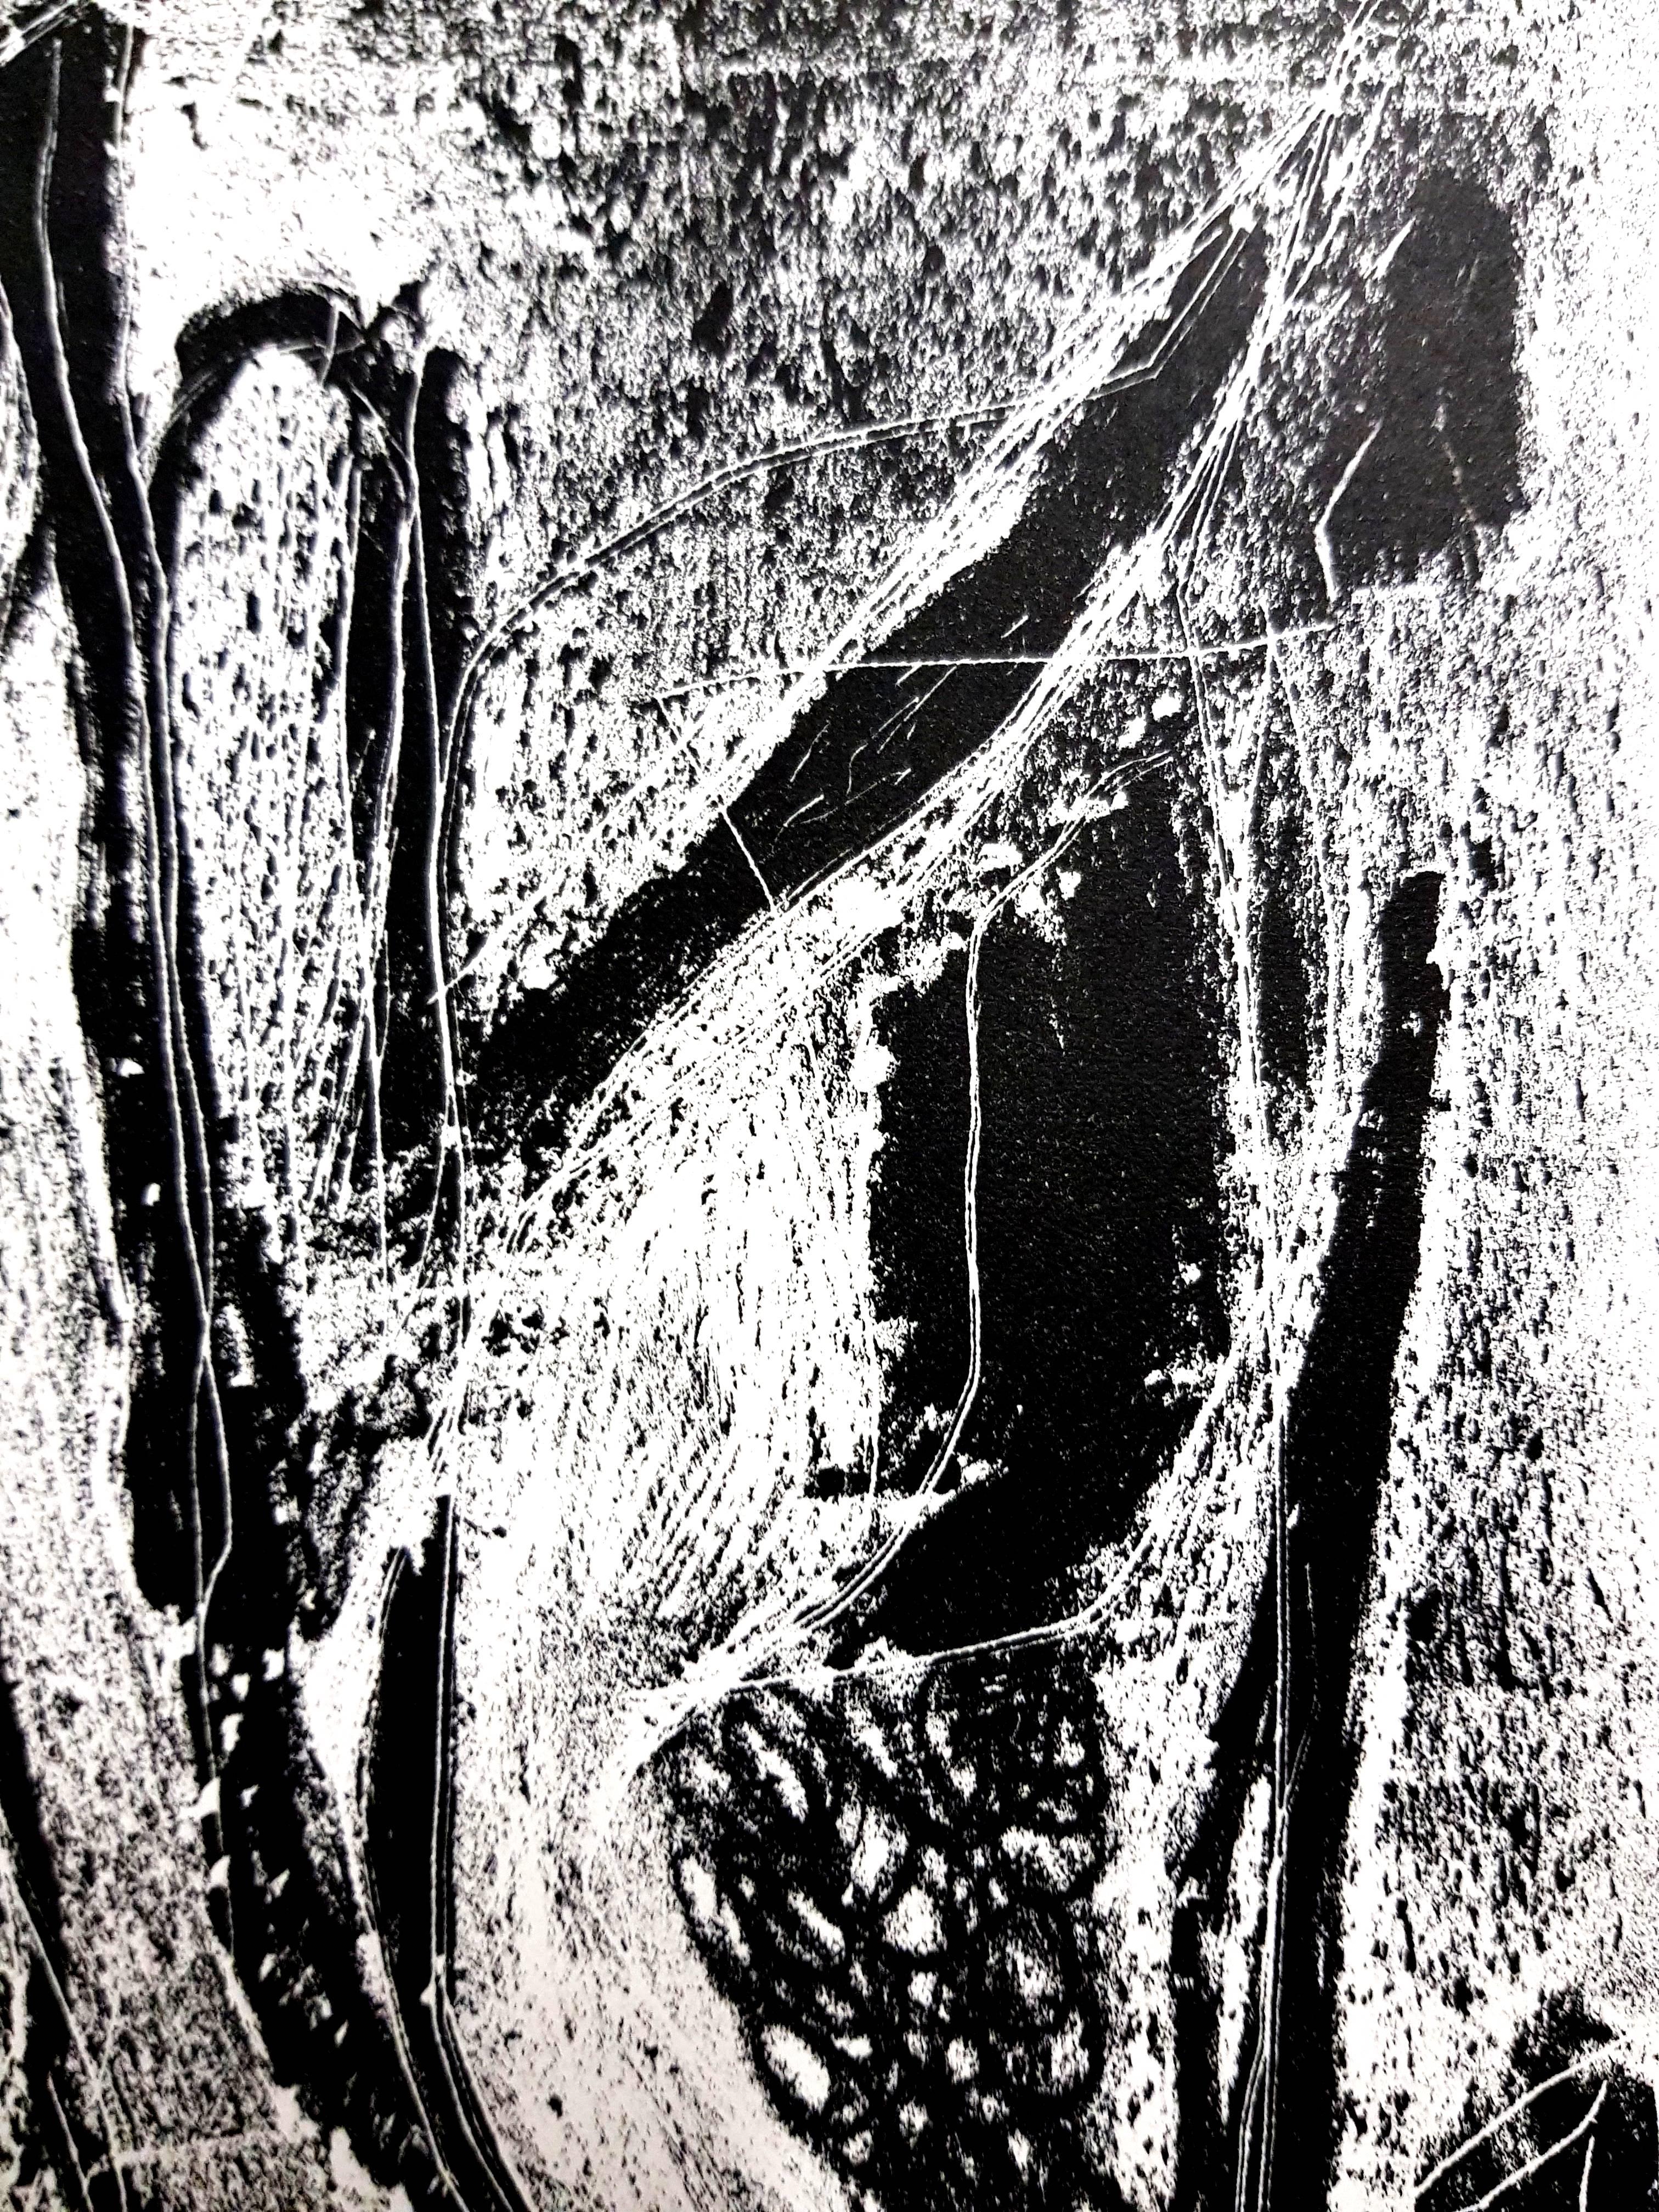 Original lithograph by Jean-Michel Atlan
For Description of a Struggle by Franz Kafka
Paris, Maeght Publisher, 1946. 
Dimensions: 30.5 x 24.5
Edition: 300 on vellum 
Mourlot

JEAN-MICHEL ATLAN (1913 - 1960)
Of Algerian-Jewish descent, Jean-Michel